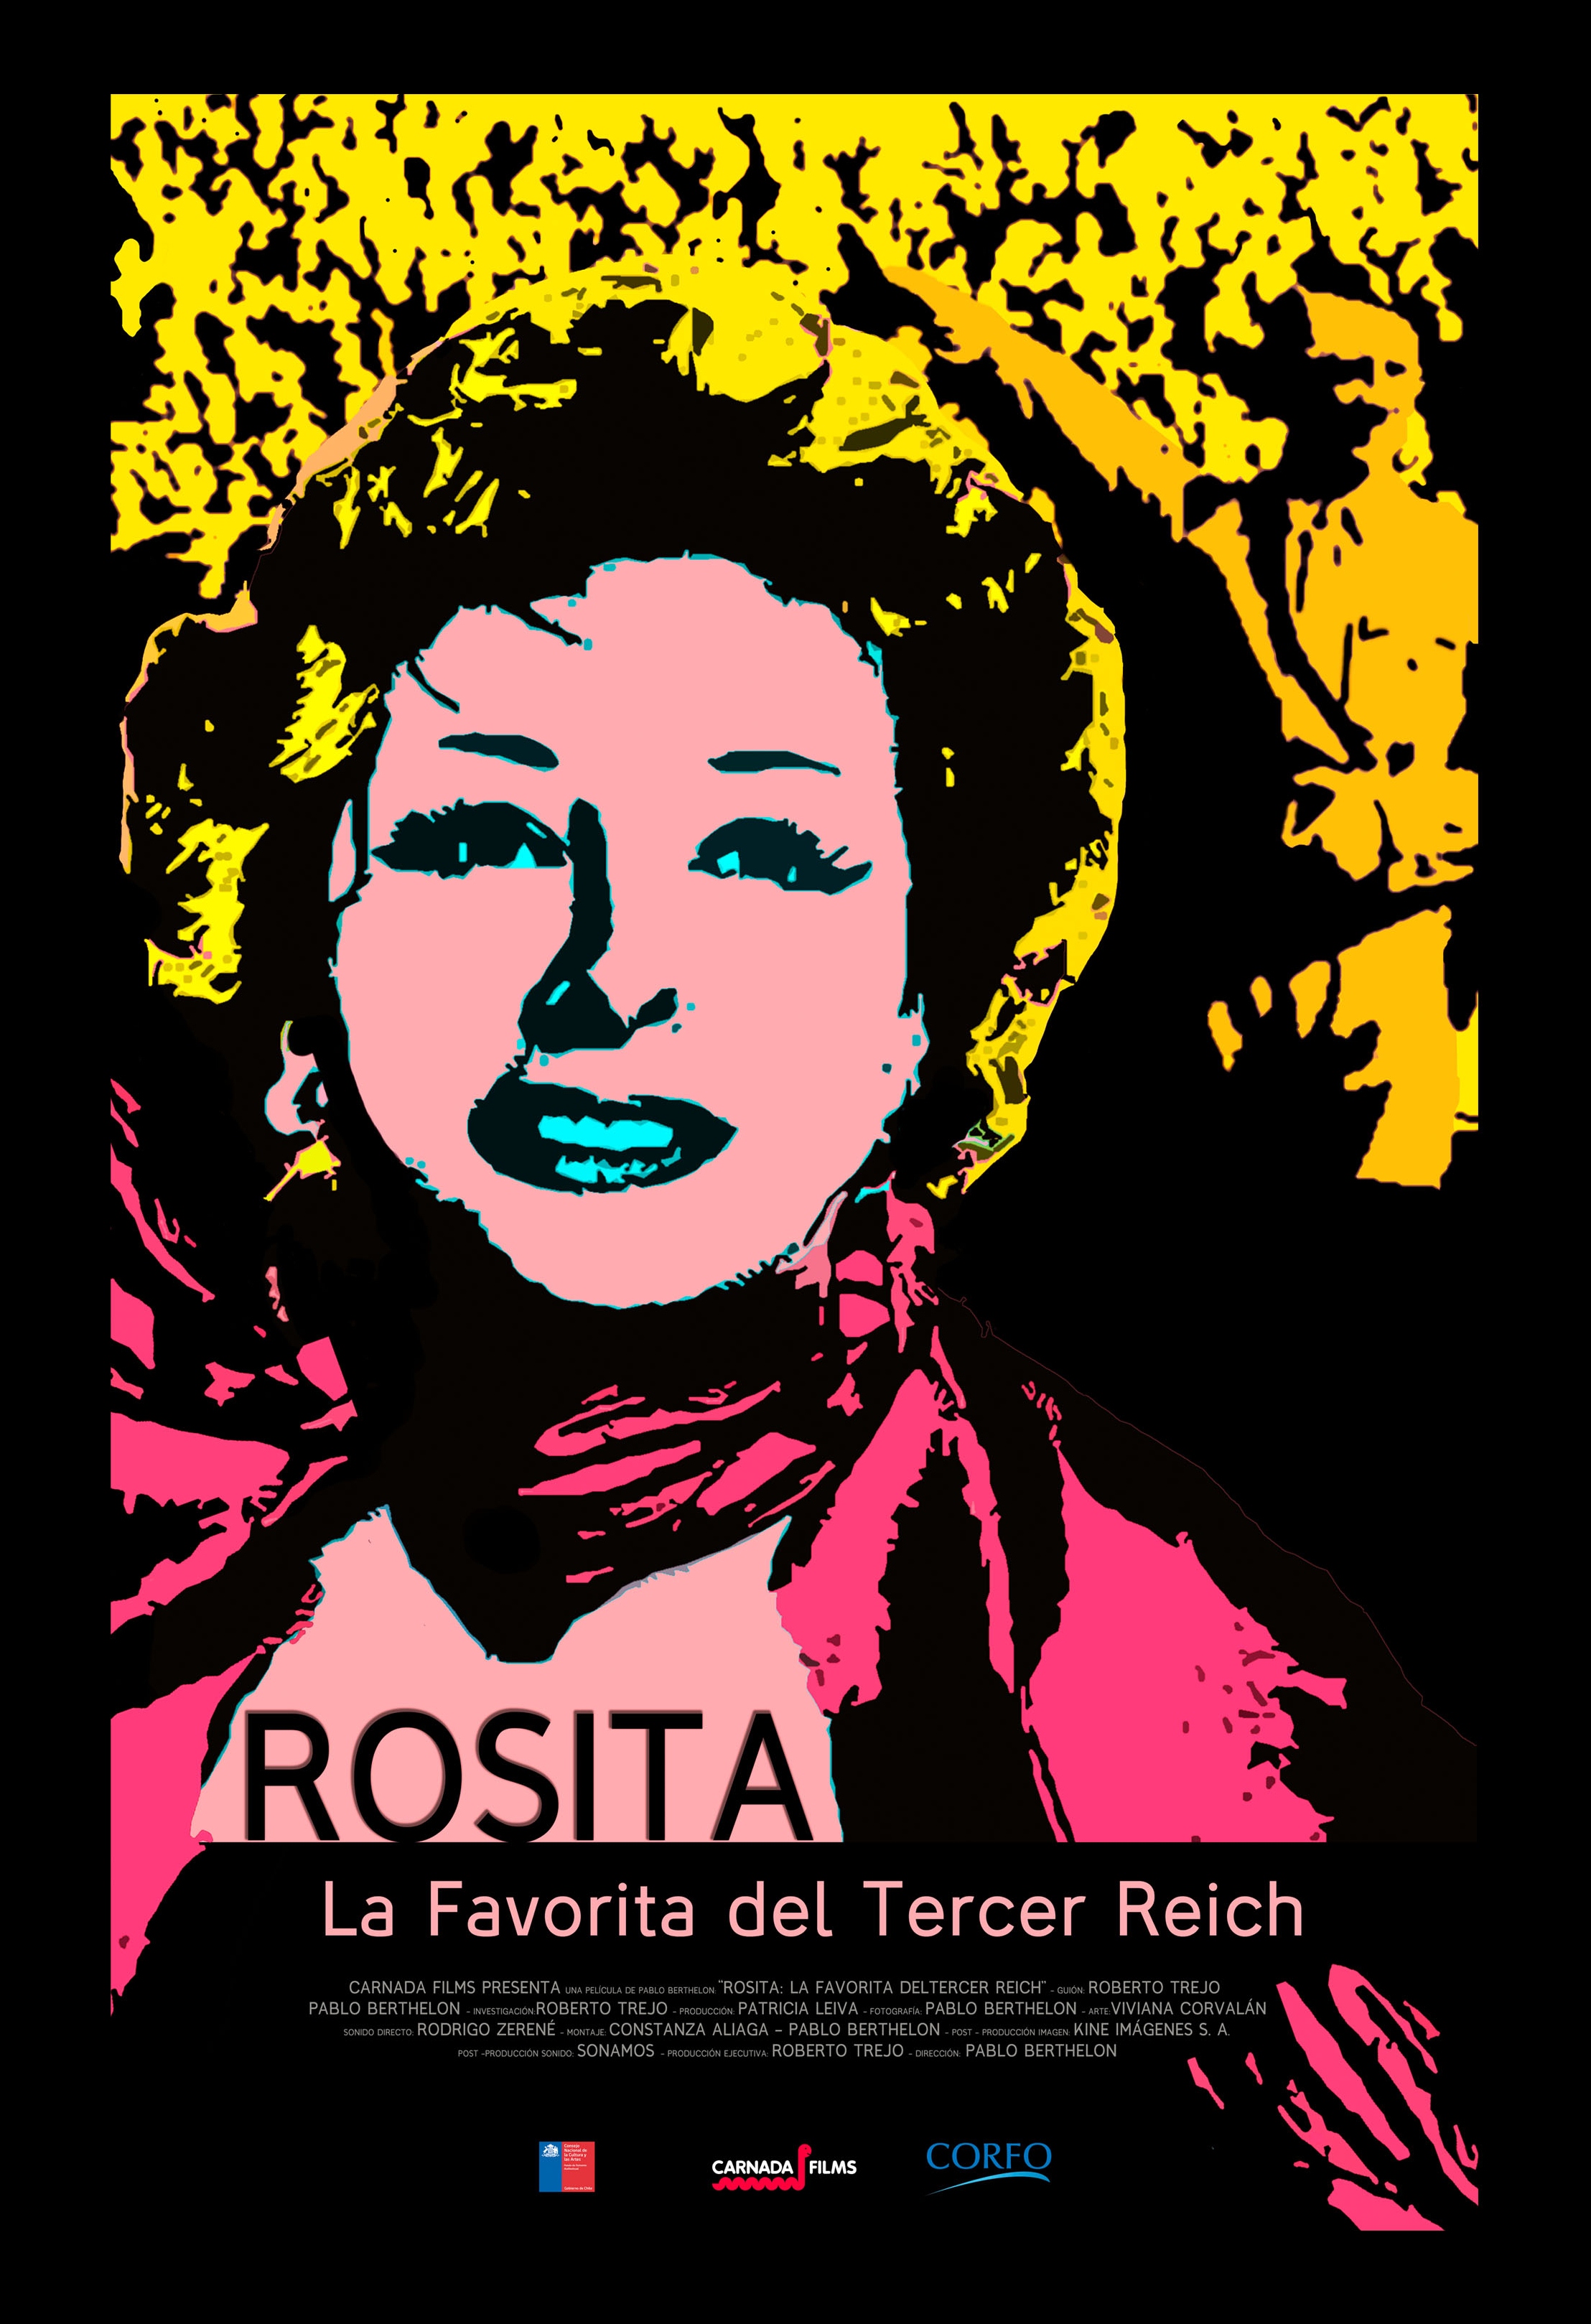 Rosita, la favorita del Tercer Reich